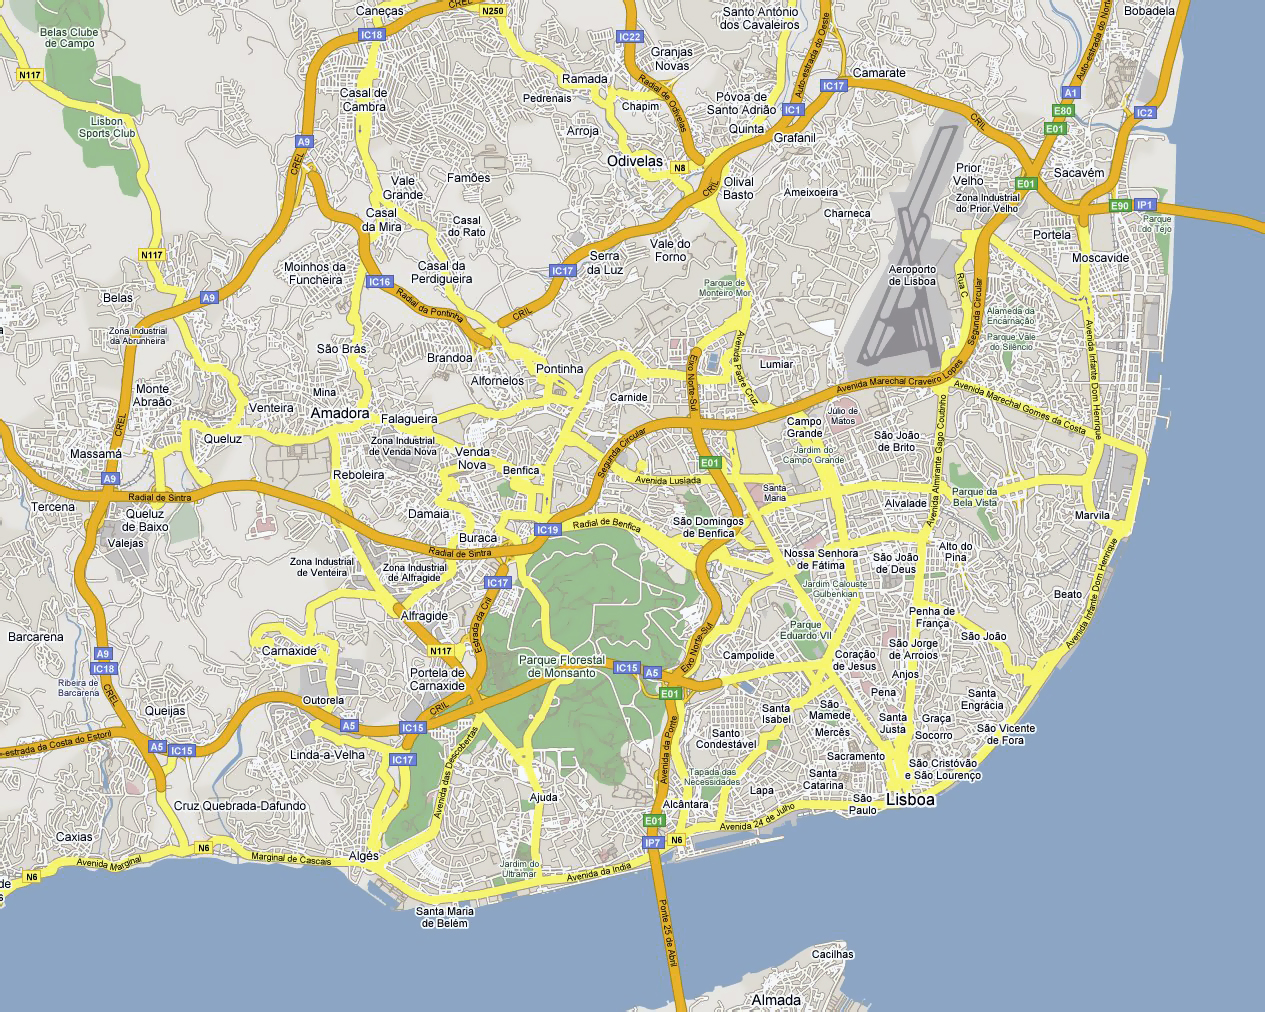 Detailed road map of Lisbon. Lisbon city detailed road map Vidiani